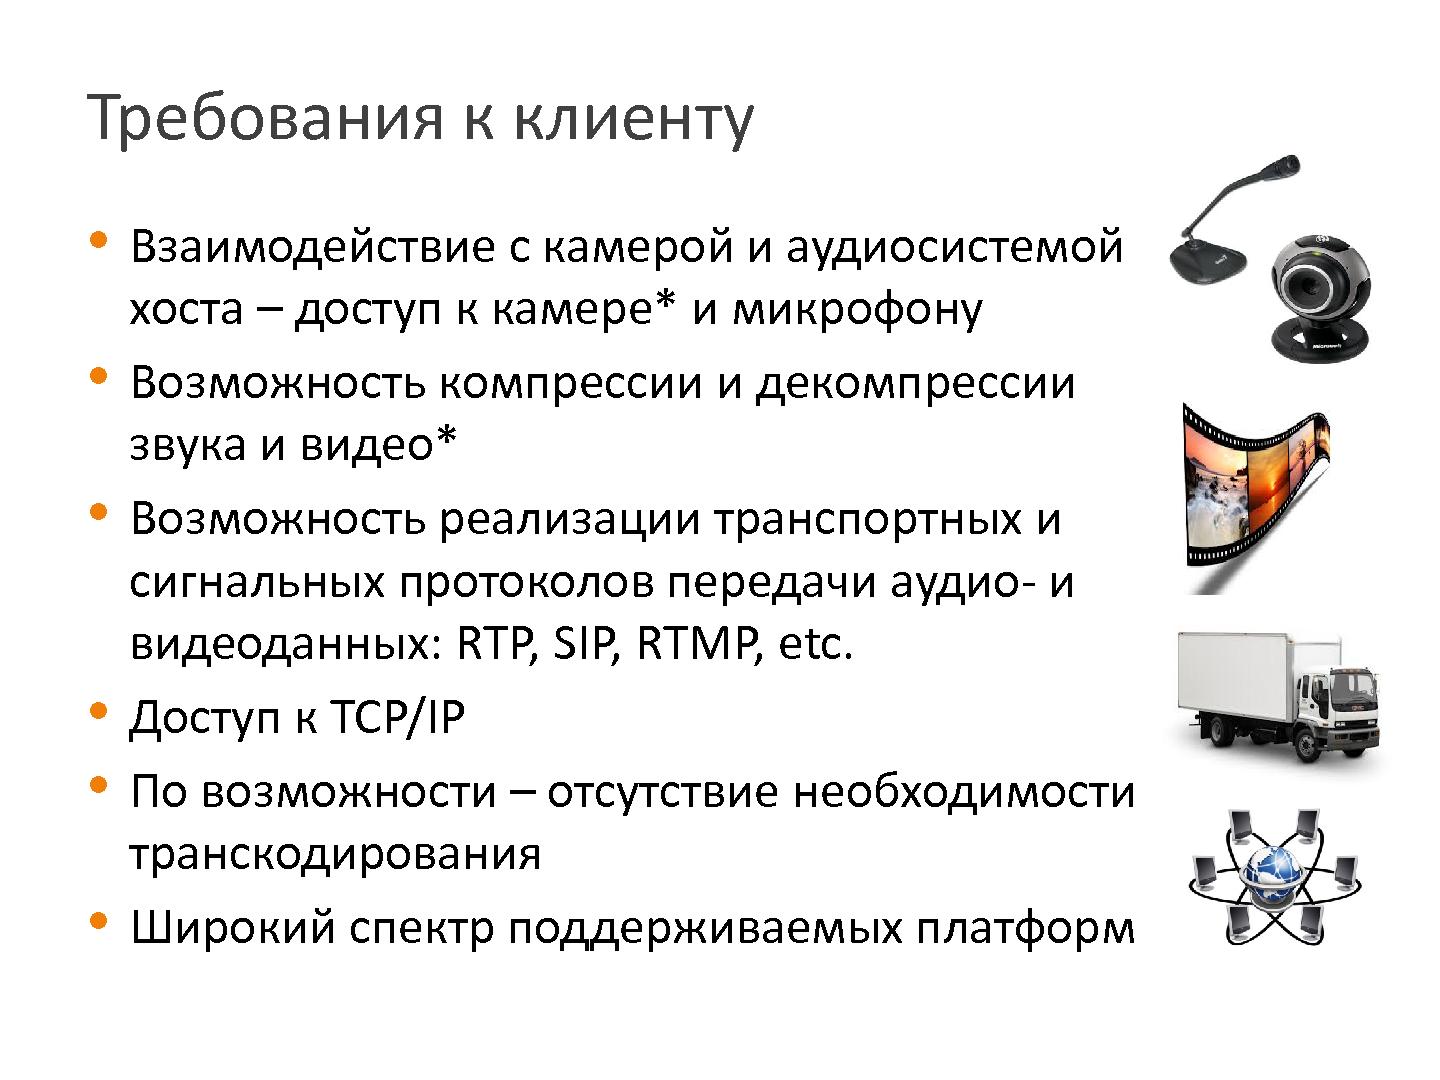 Файл:Видеосвязь на веб-странице — технологии и перспективы (Александр Иваненко, SECR-2013).pdf